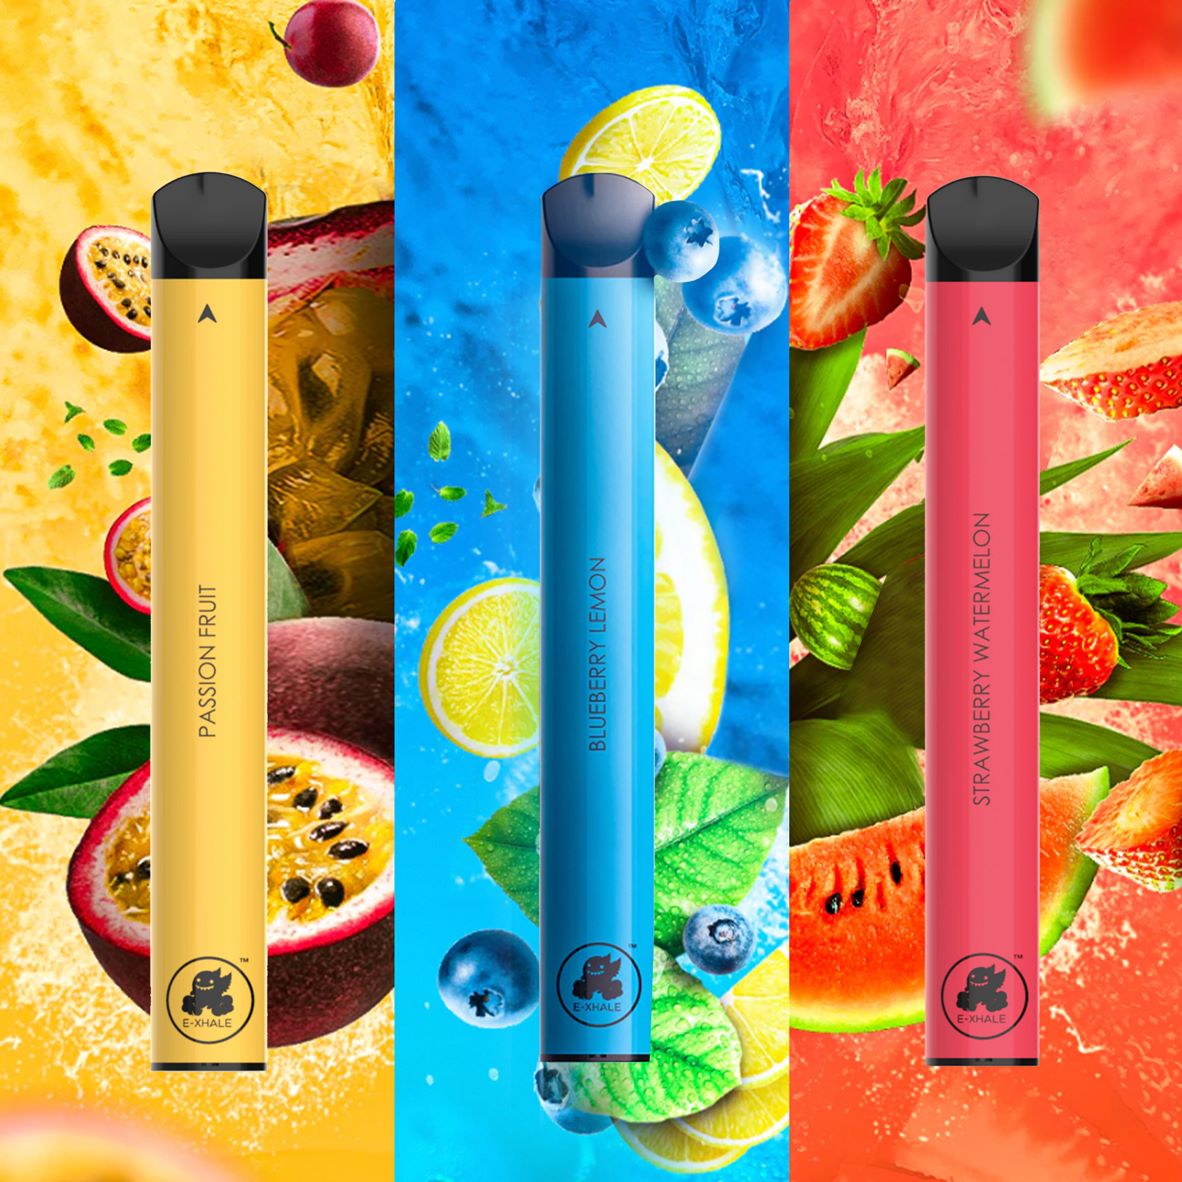 Flum MI - A Disposable E-Cigarette With a Variety of Premium Flavors